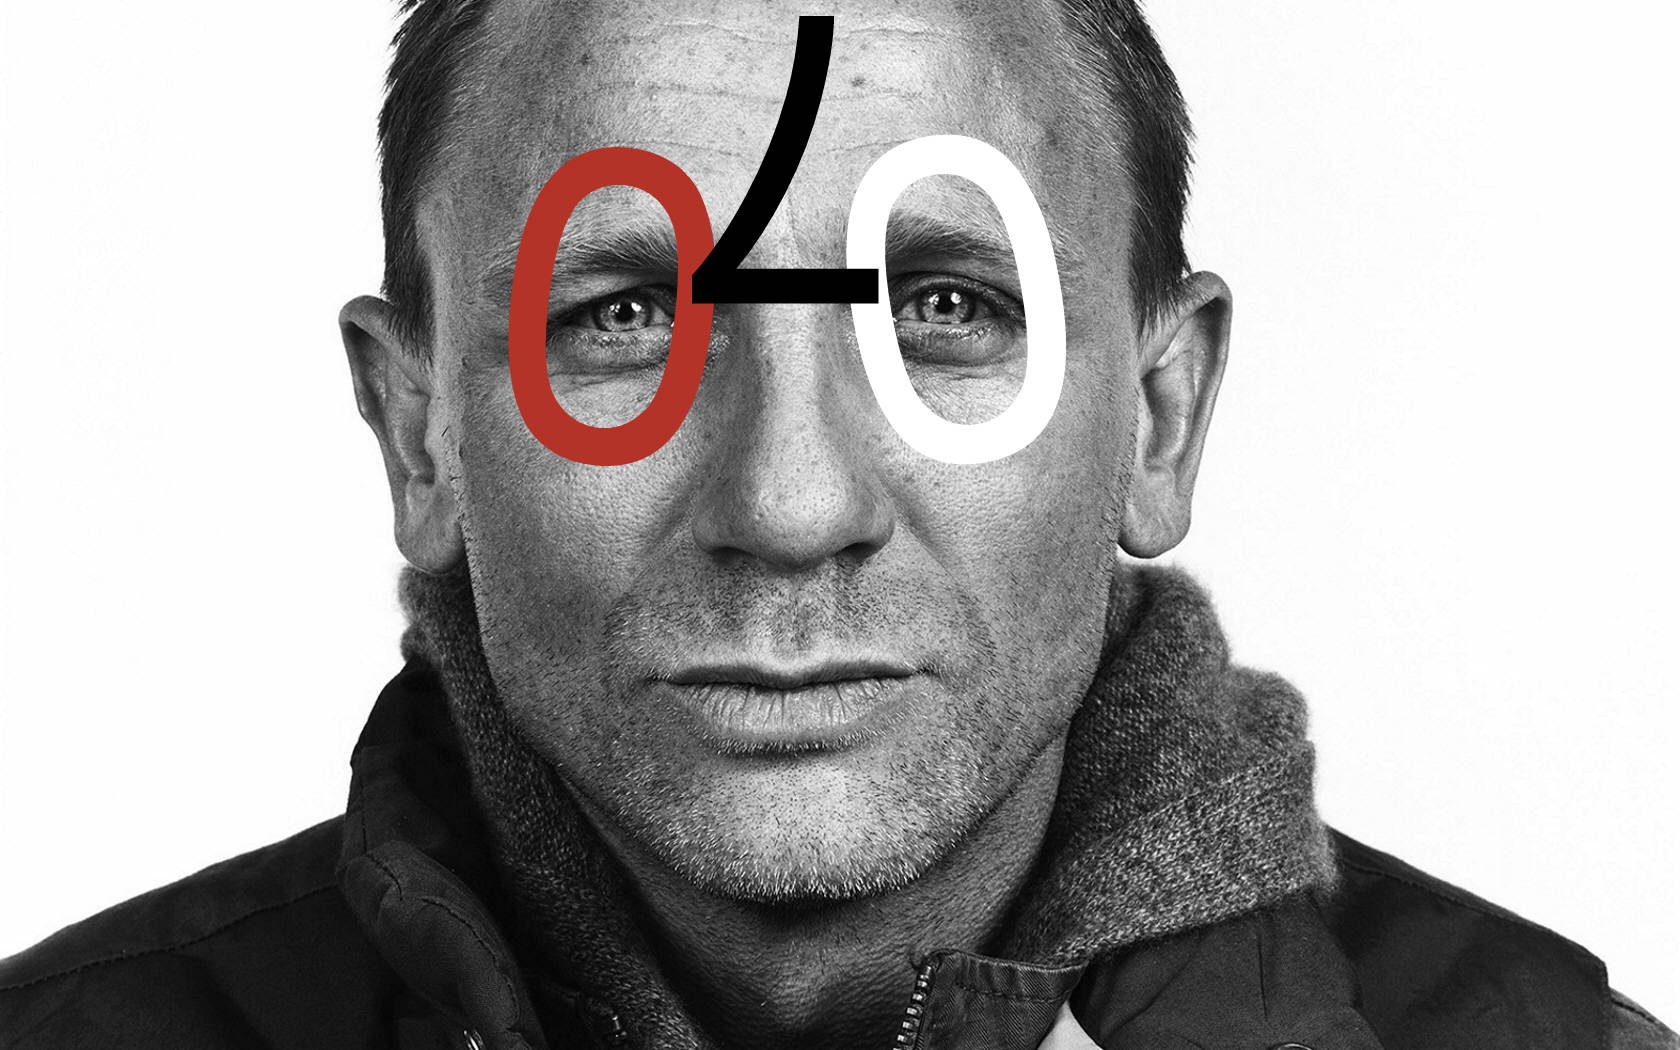 People 1680x1050 Daniel Craig James Bond 007 actor face men humor